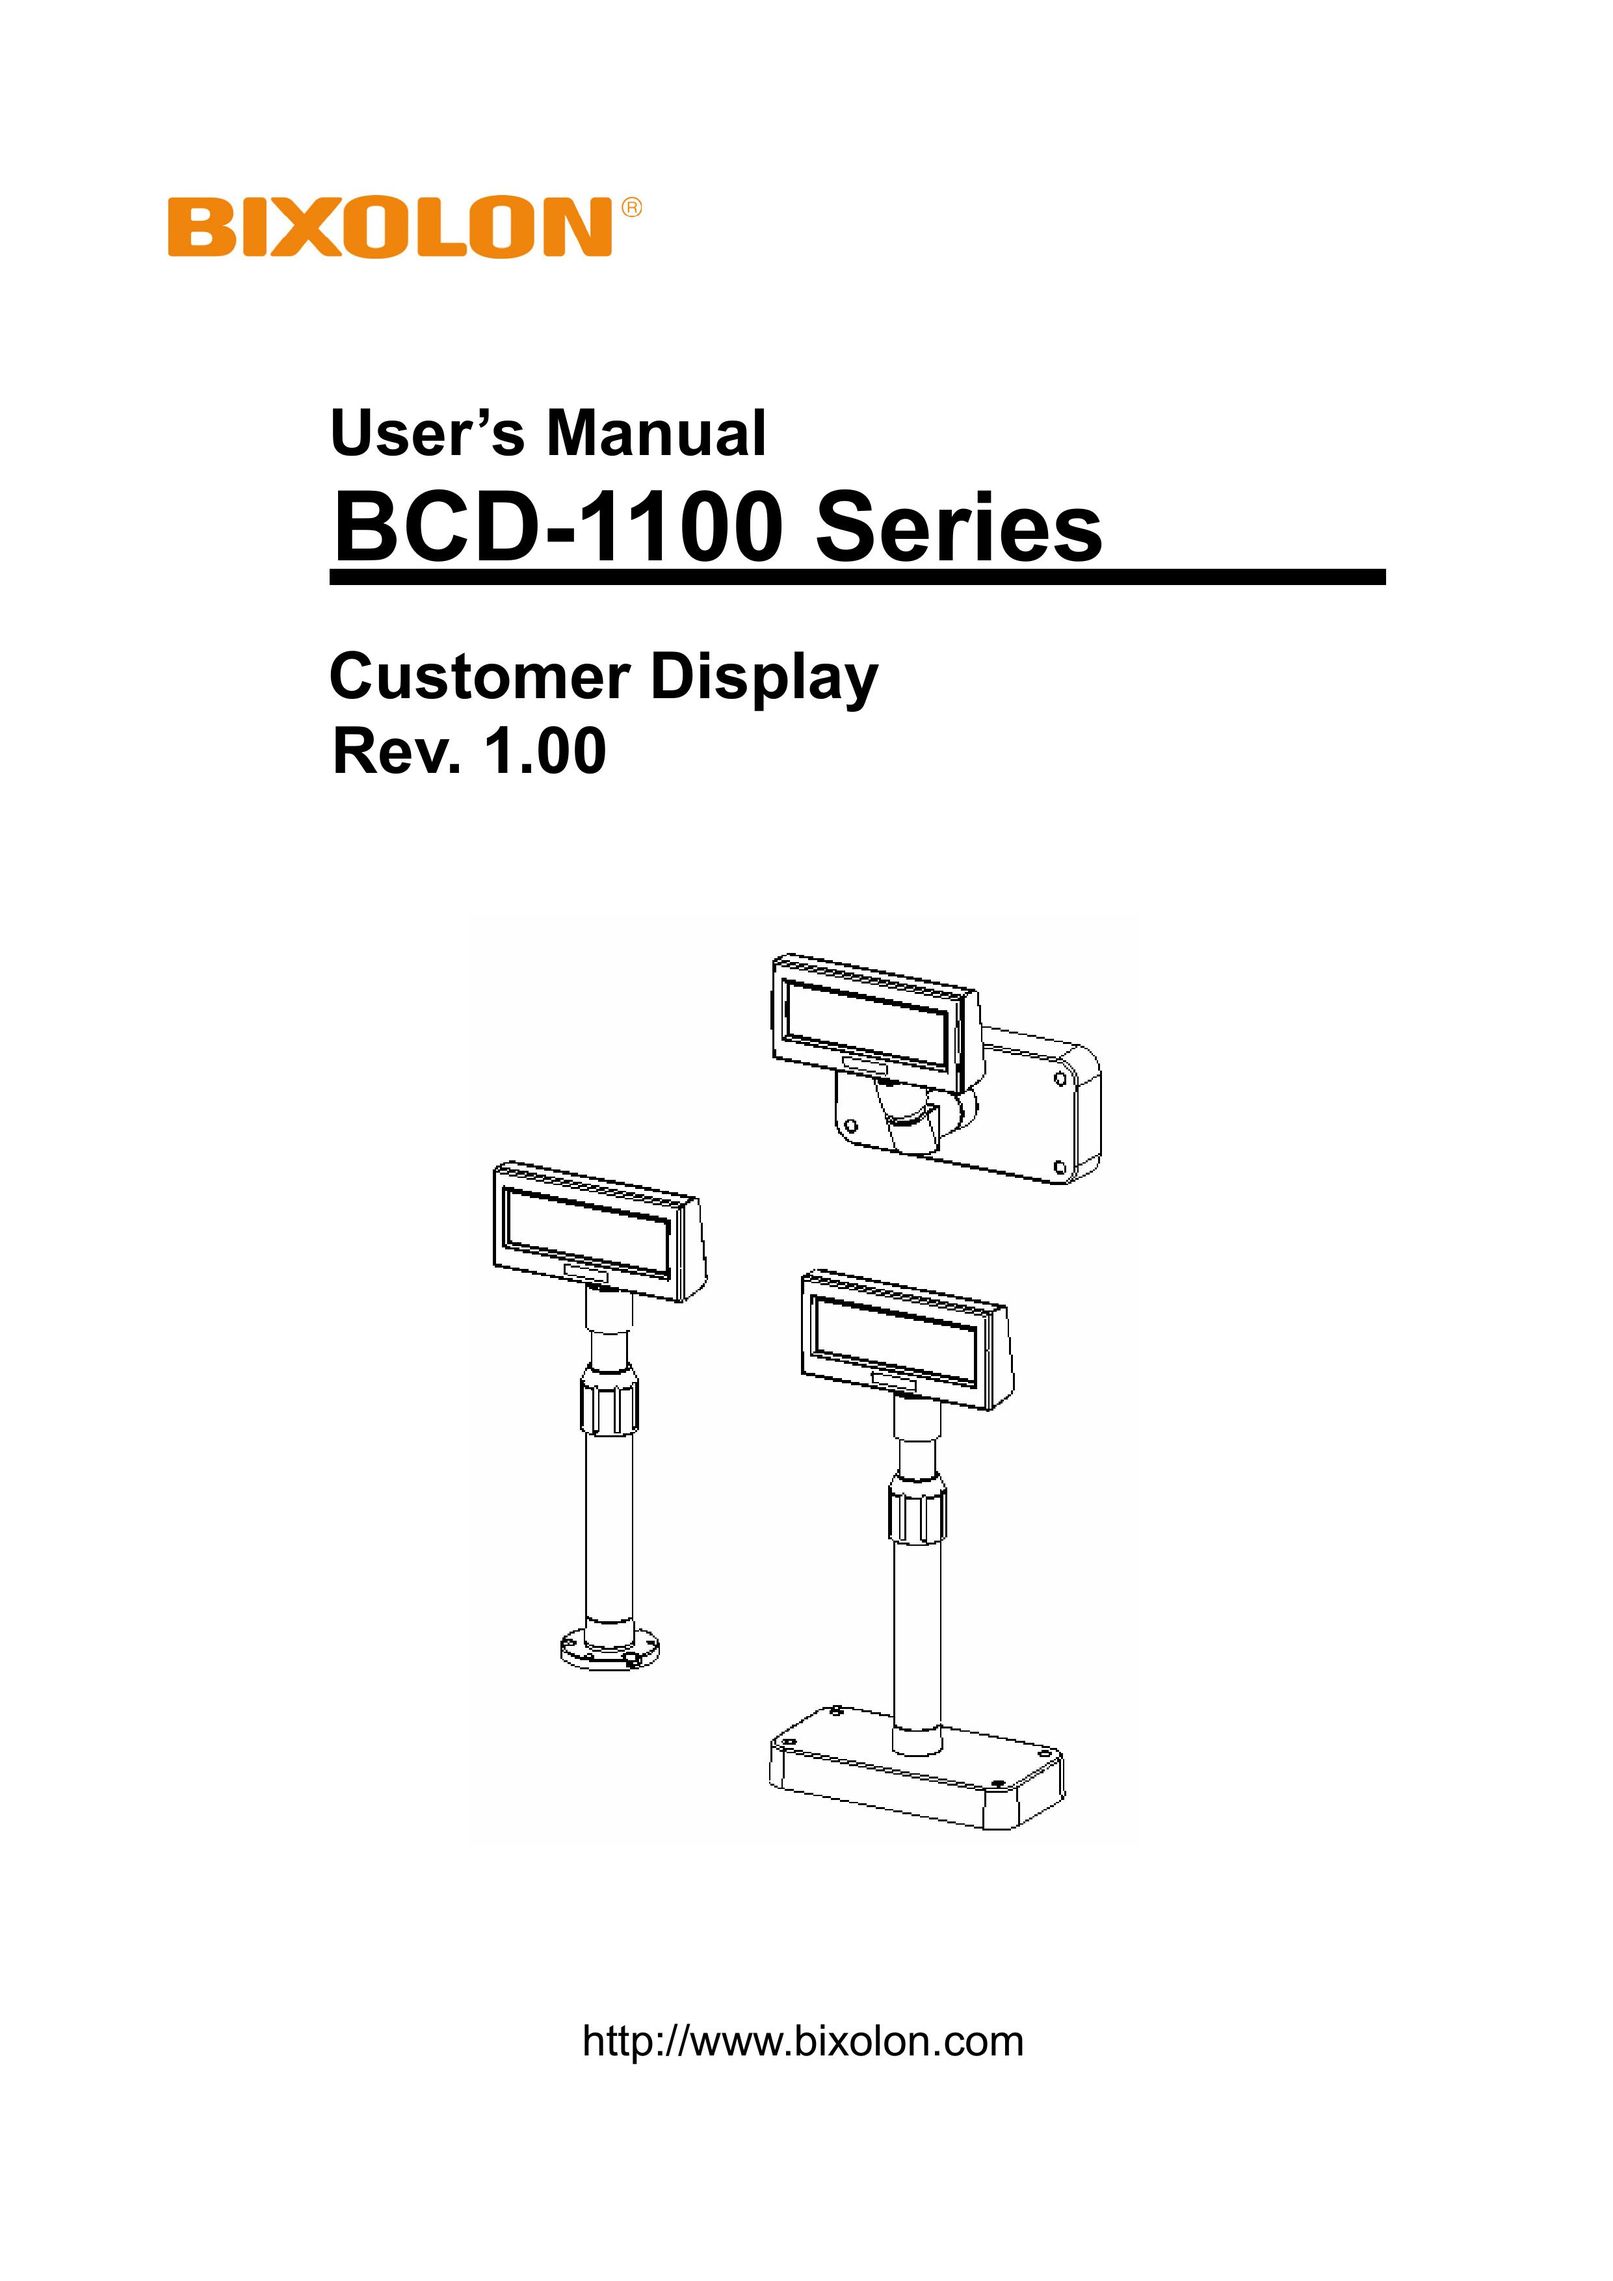 BIXOLON BCD-1100 Home Theater Screen User Manual